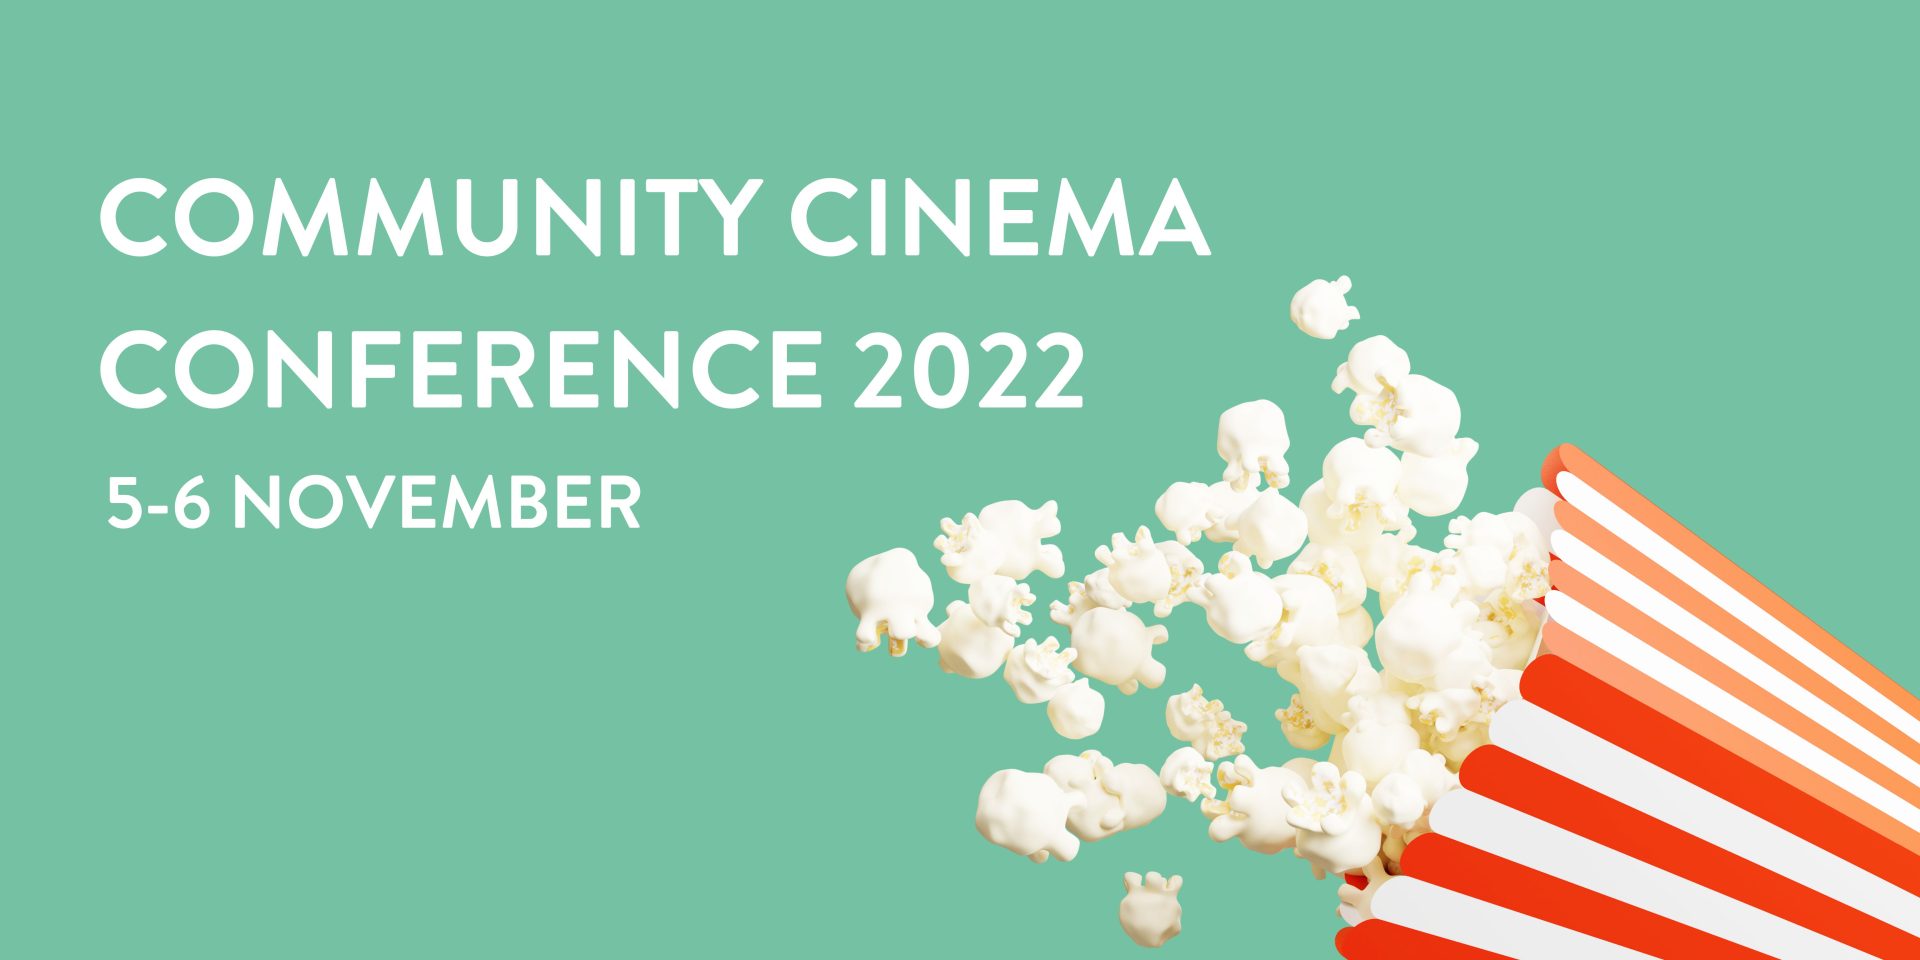 Community Cinema Conference Programme headshot